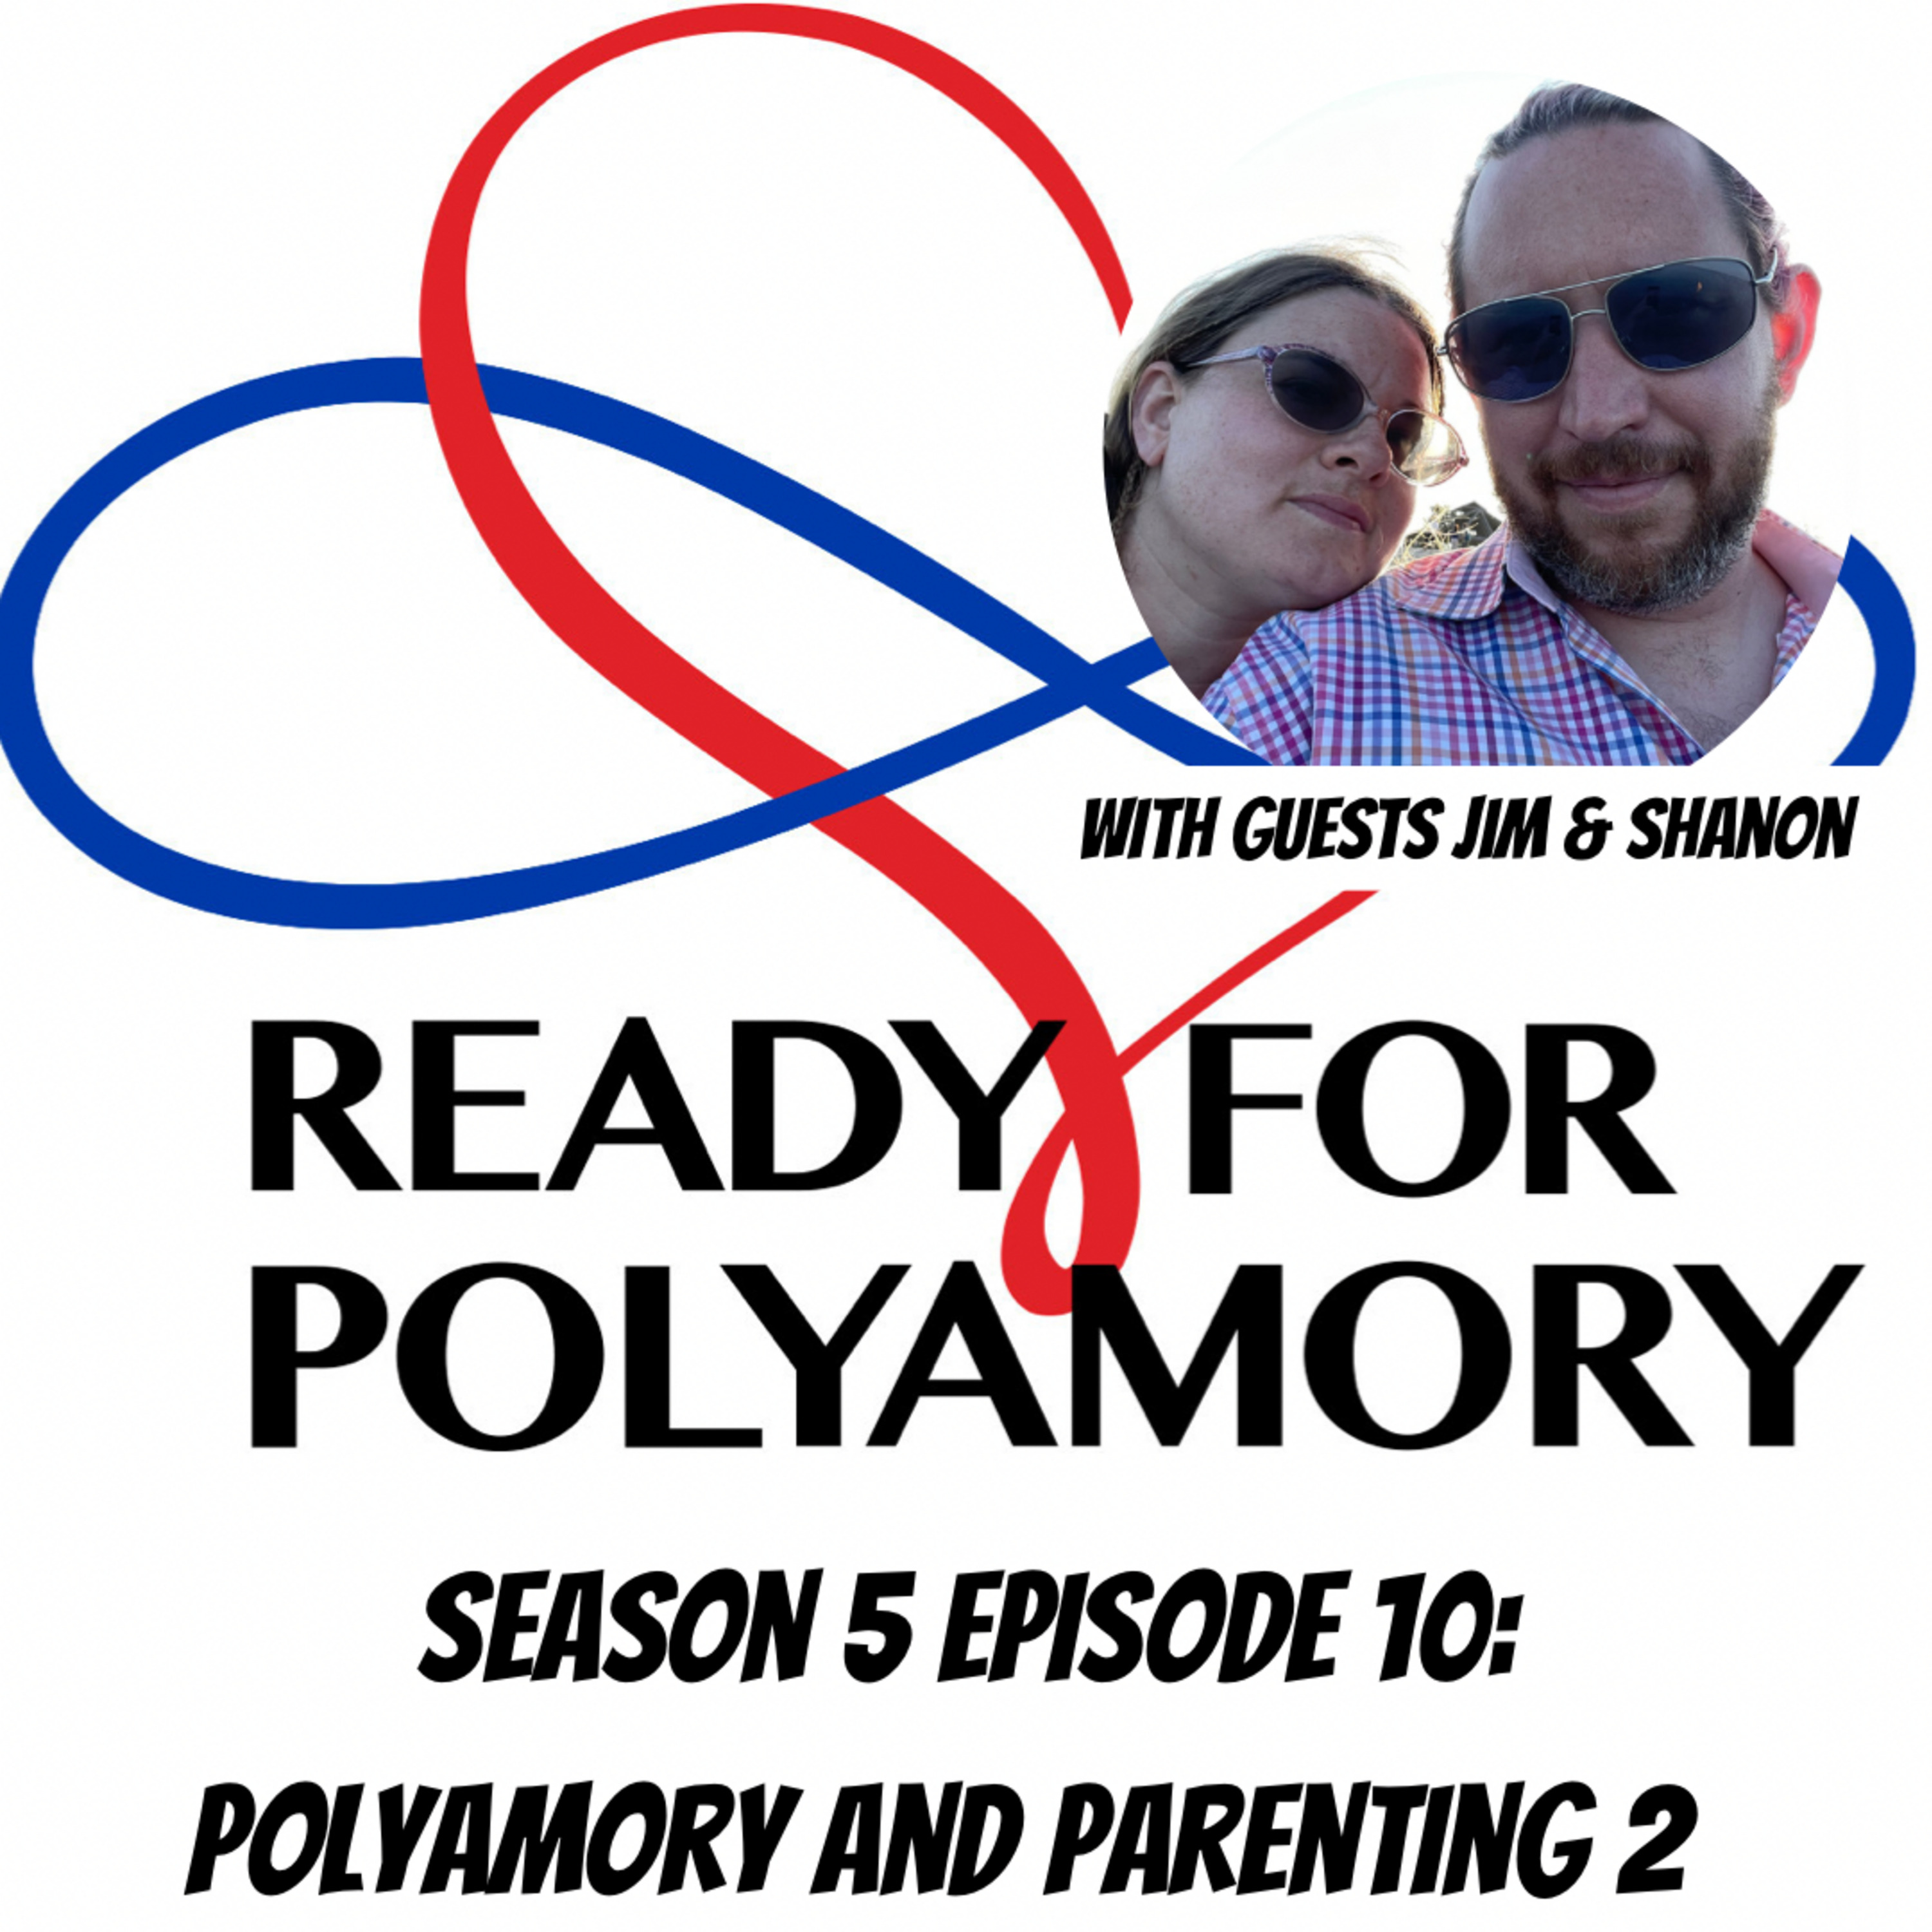 Season 5 Episode 10: Polyamory and Parenting (Part 2)